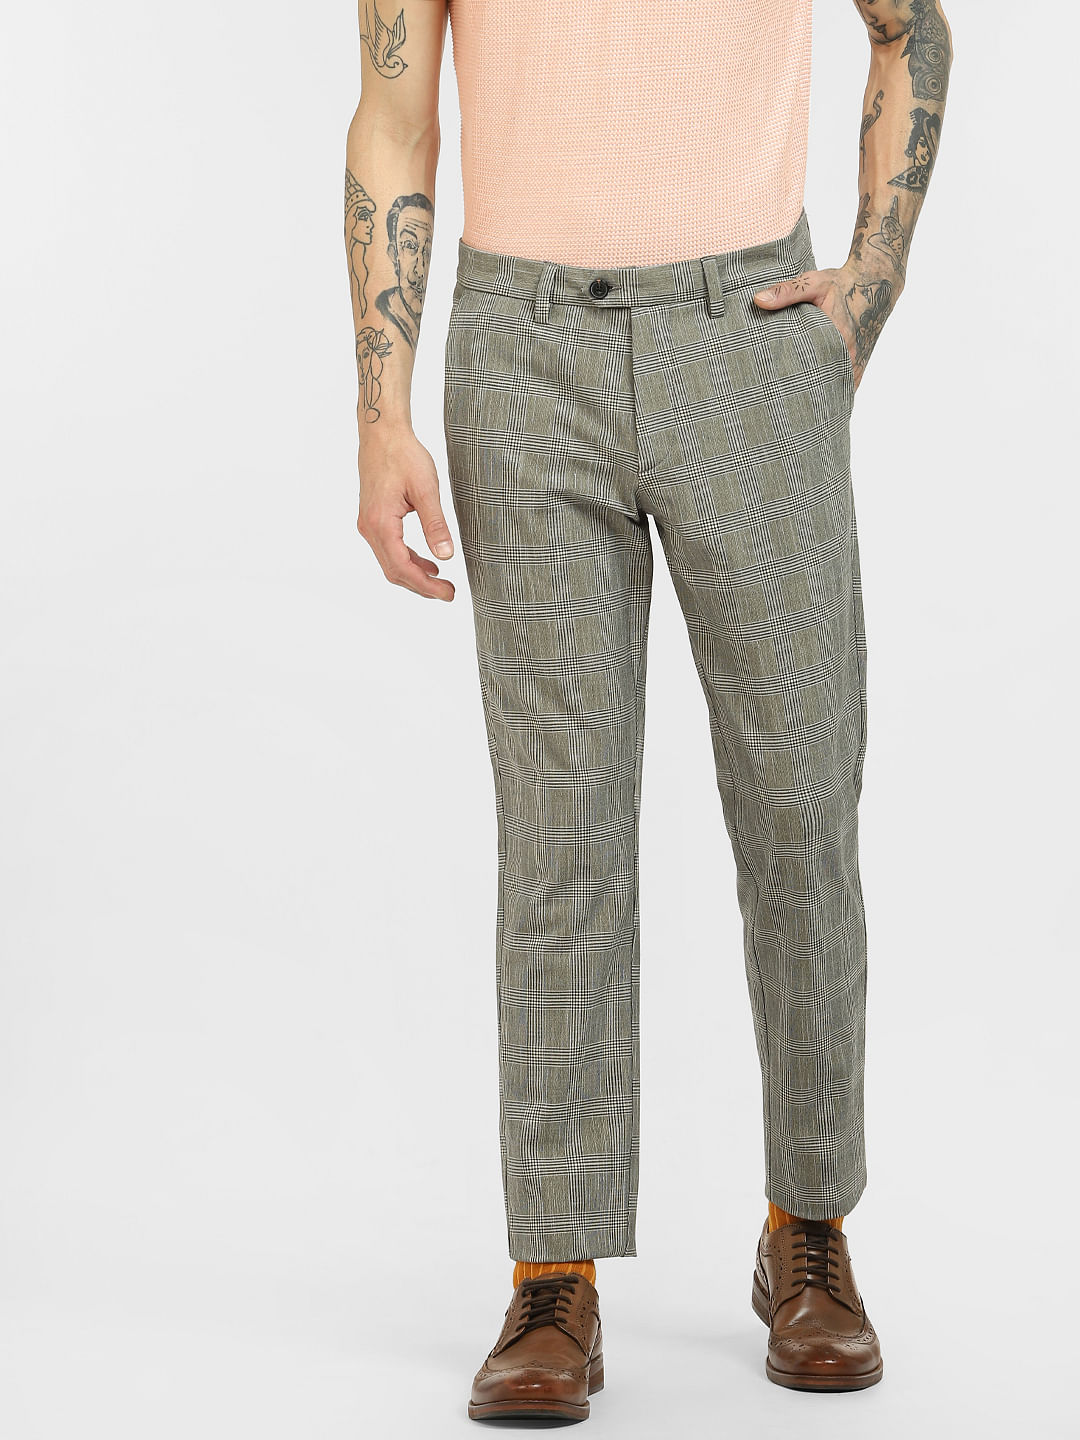 Amazonin Grey Check Pants For Men